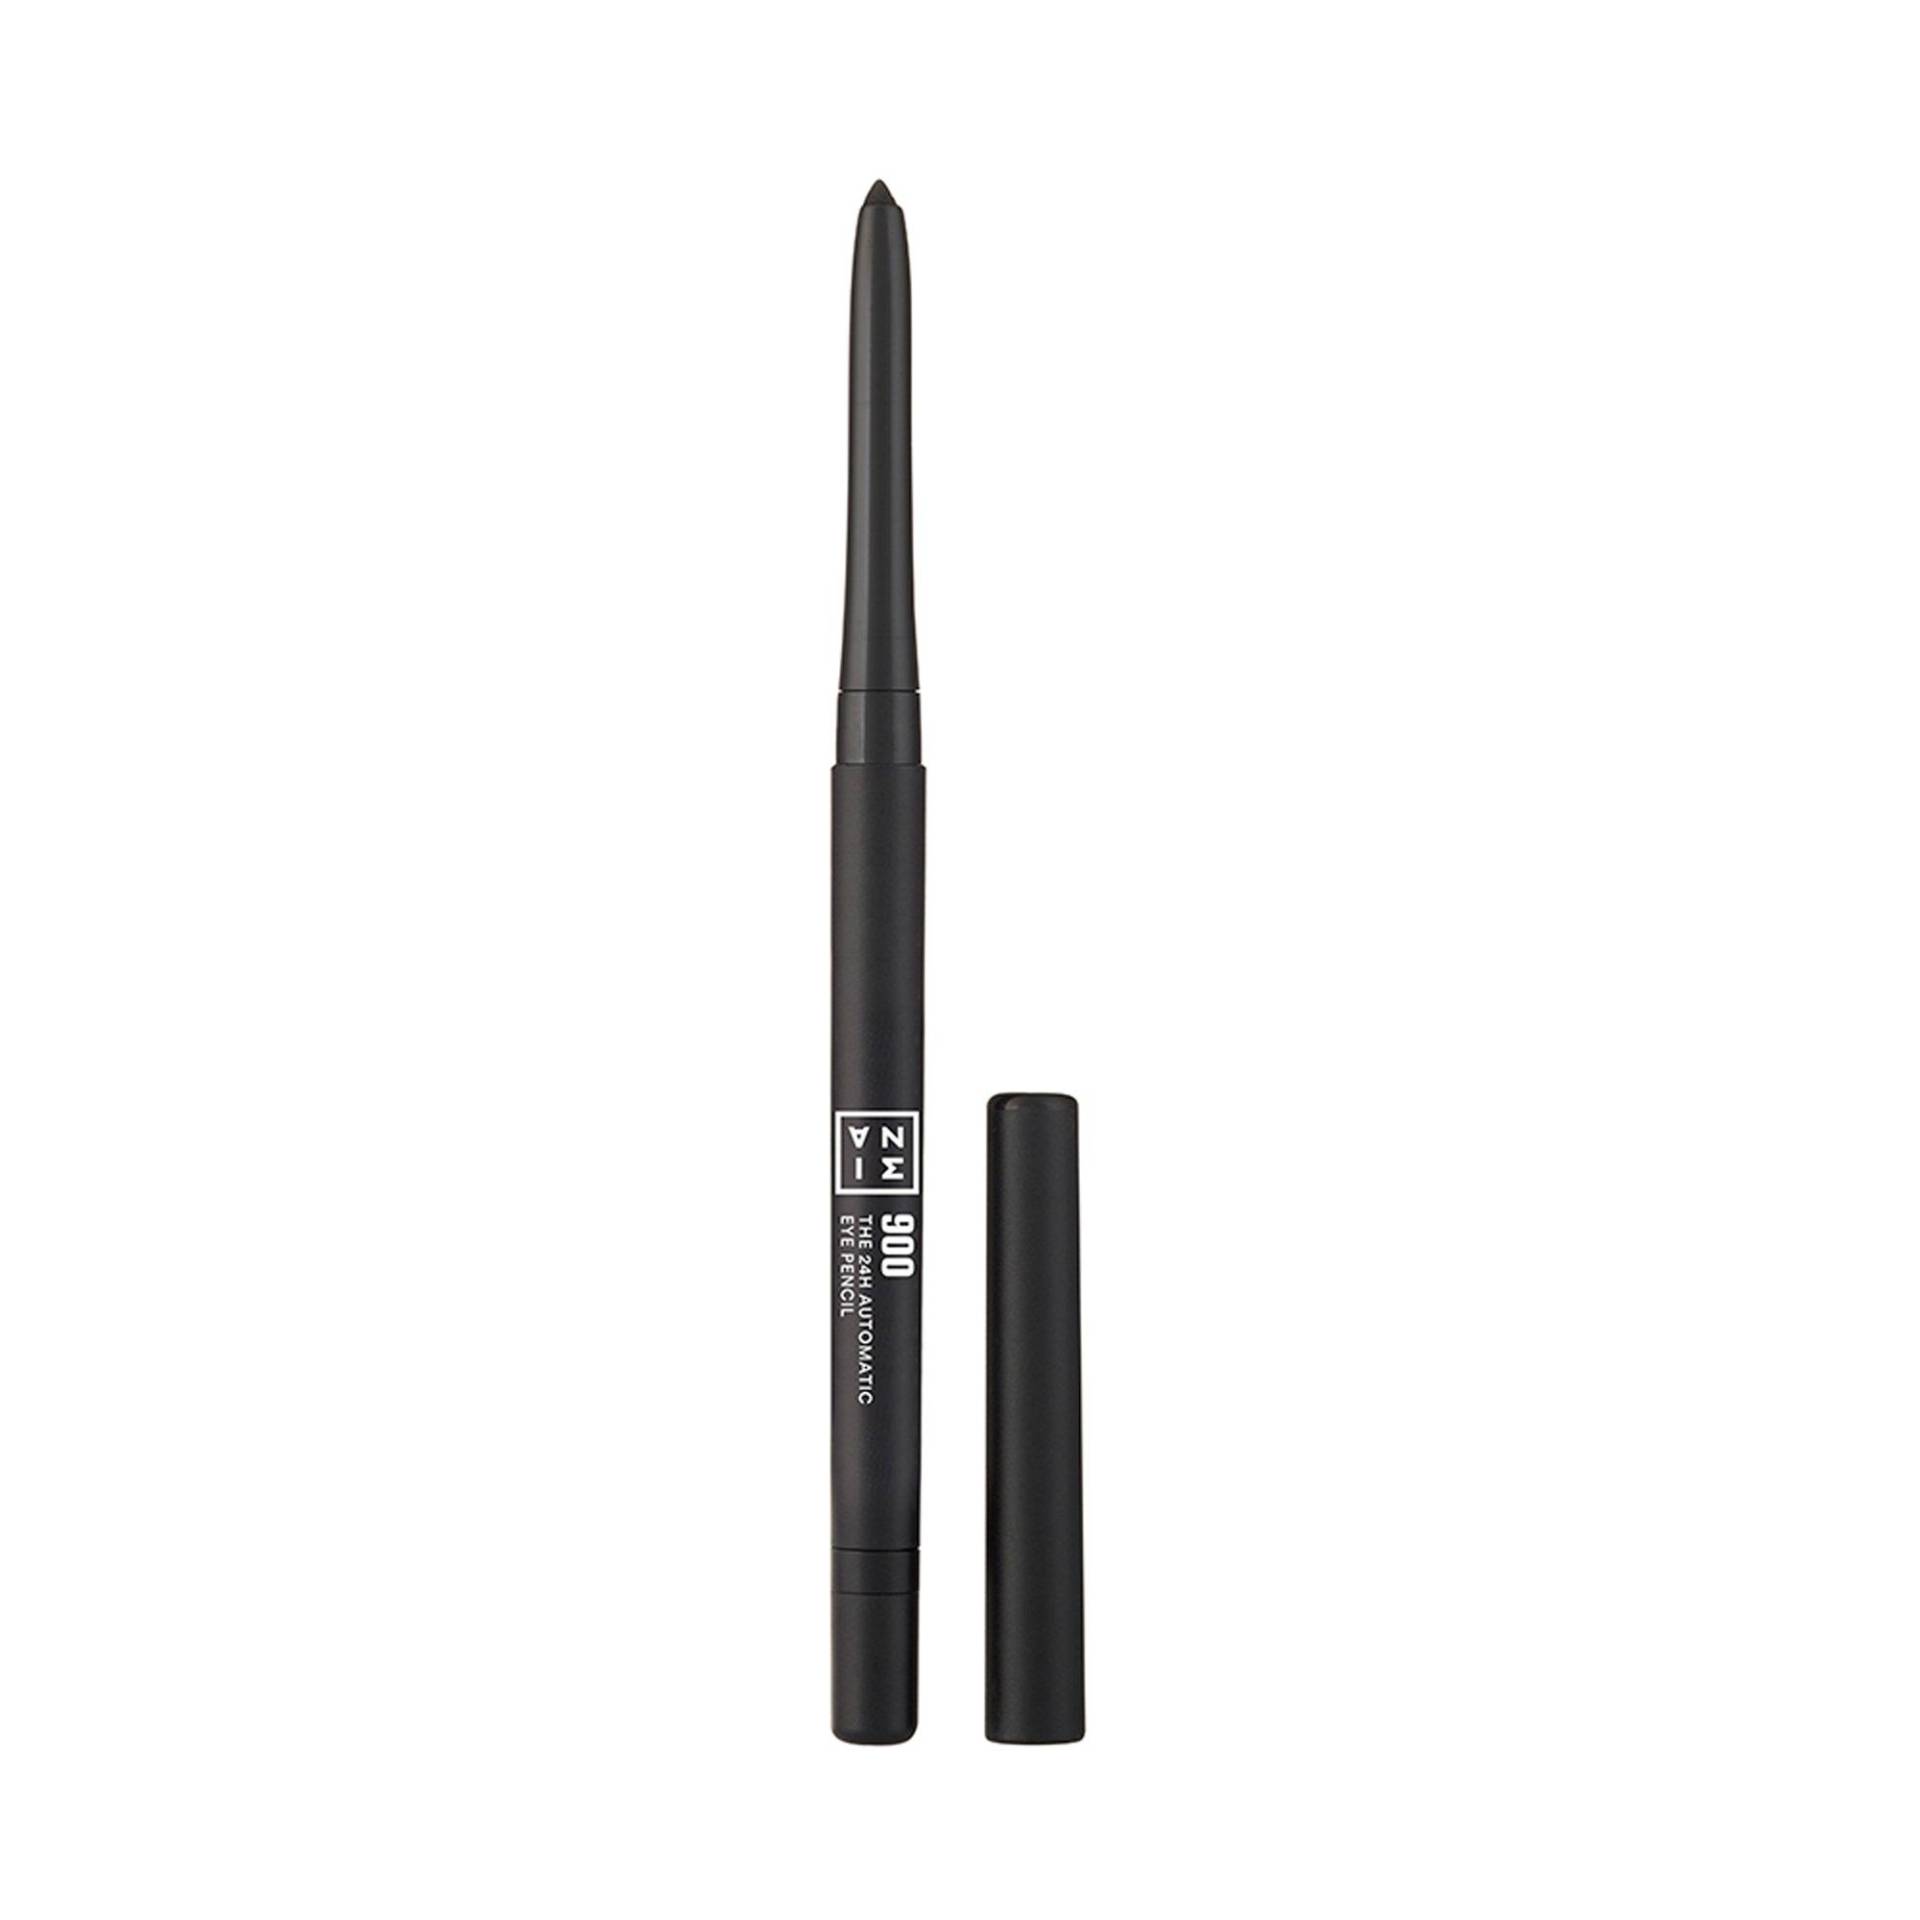 The 24h Automatic Eye Pencil Damen  Black 0.35g von 3INA